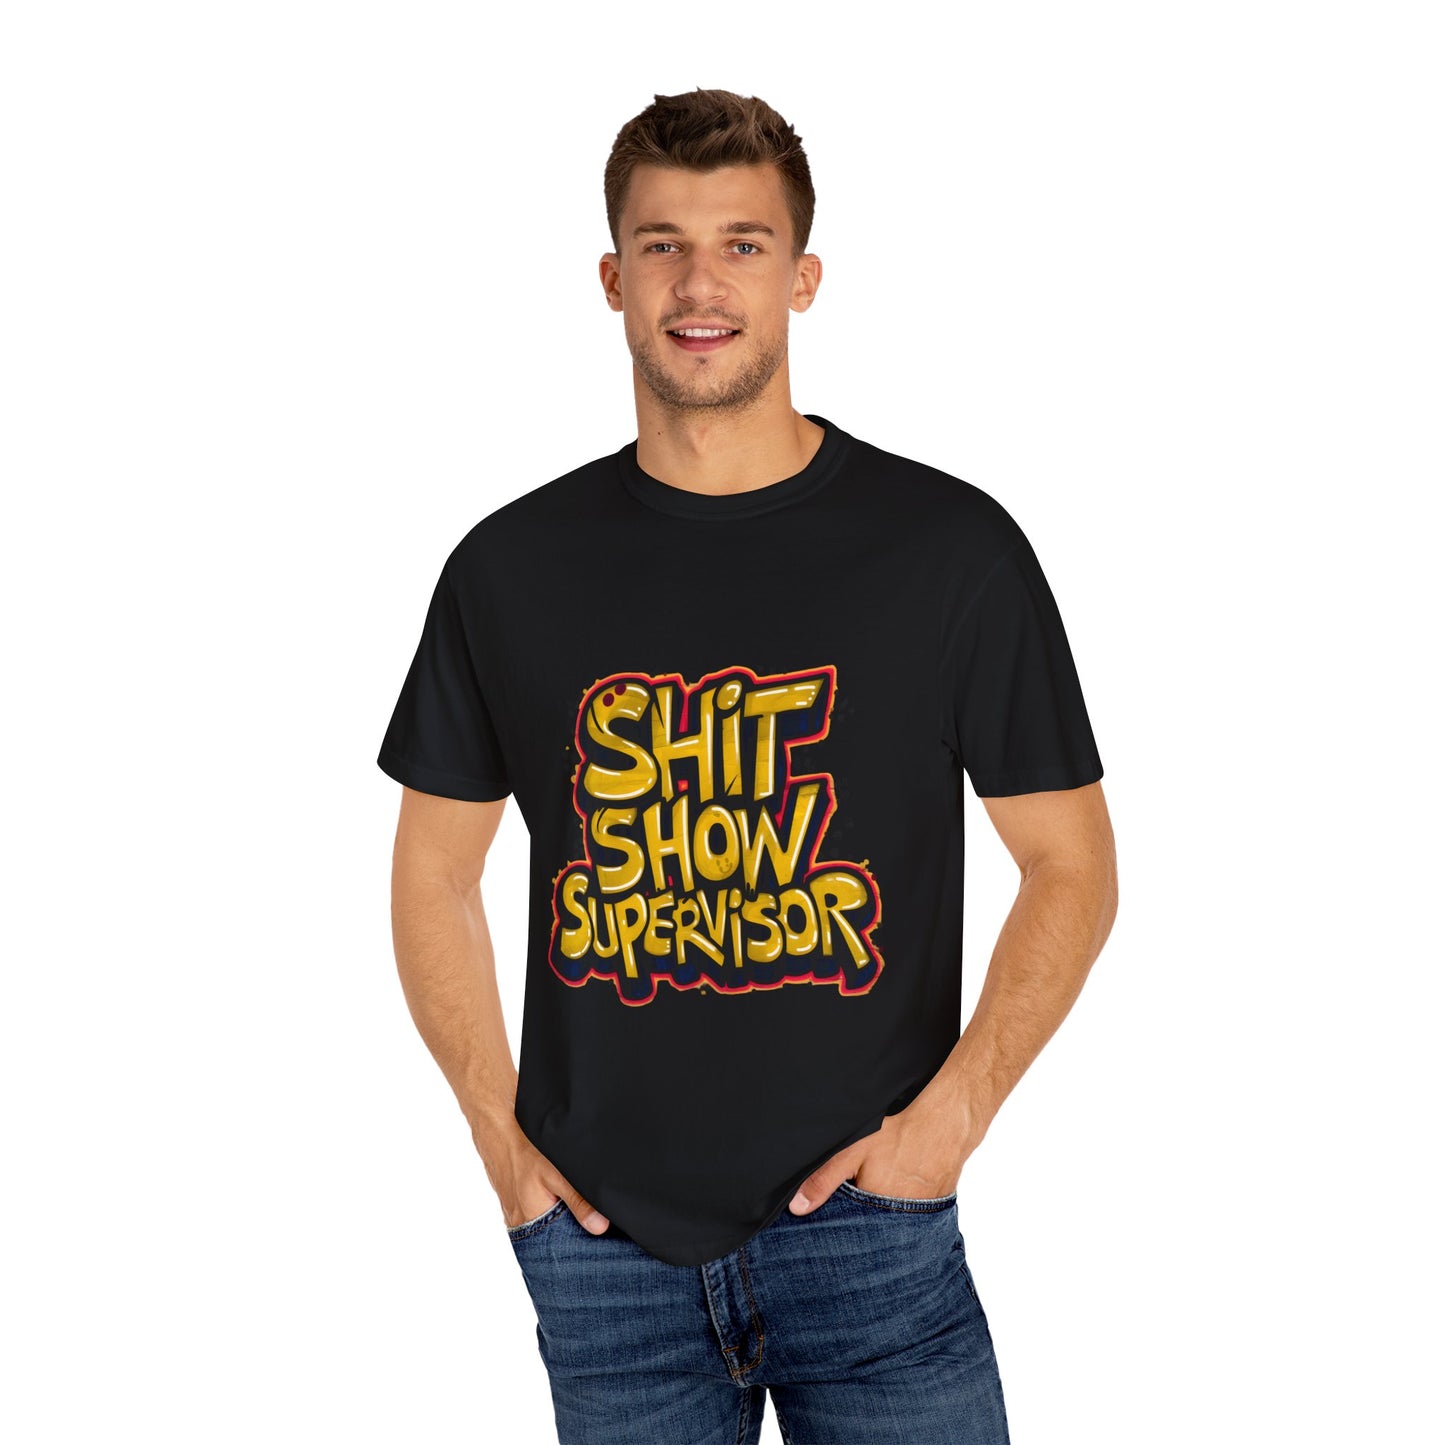 Shit Show Supervisor Urban Sarcastic Graphic Unisex Garment Dyed T-shirt Cotton Funny Humorous Graphic Soft Premium Unisex Men Women Black T-shirt Birthday Gift-18